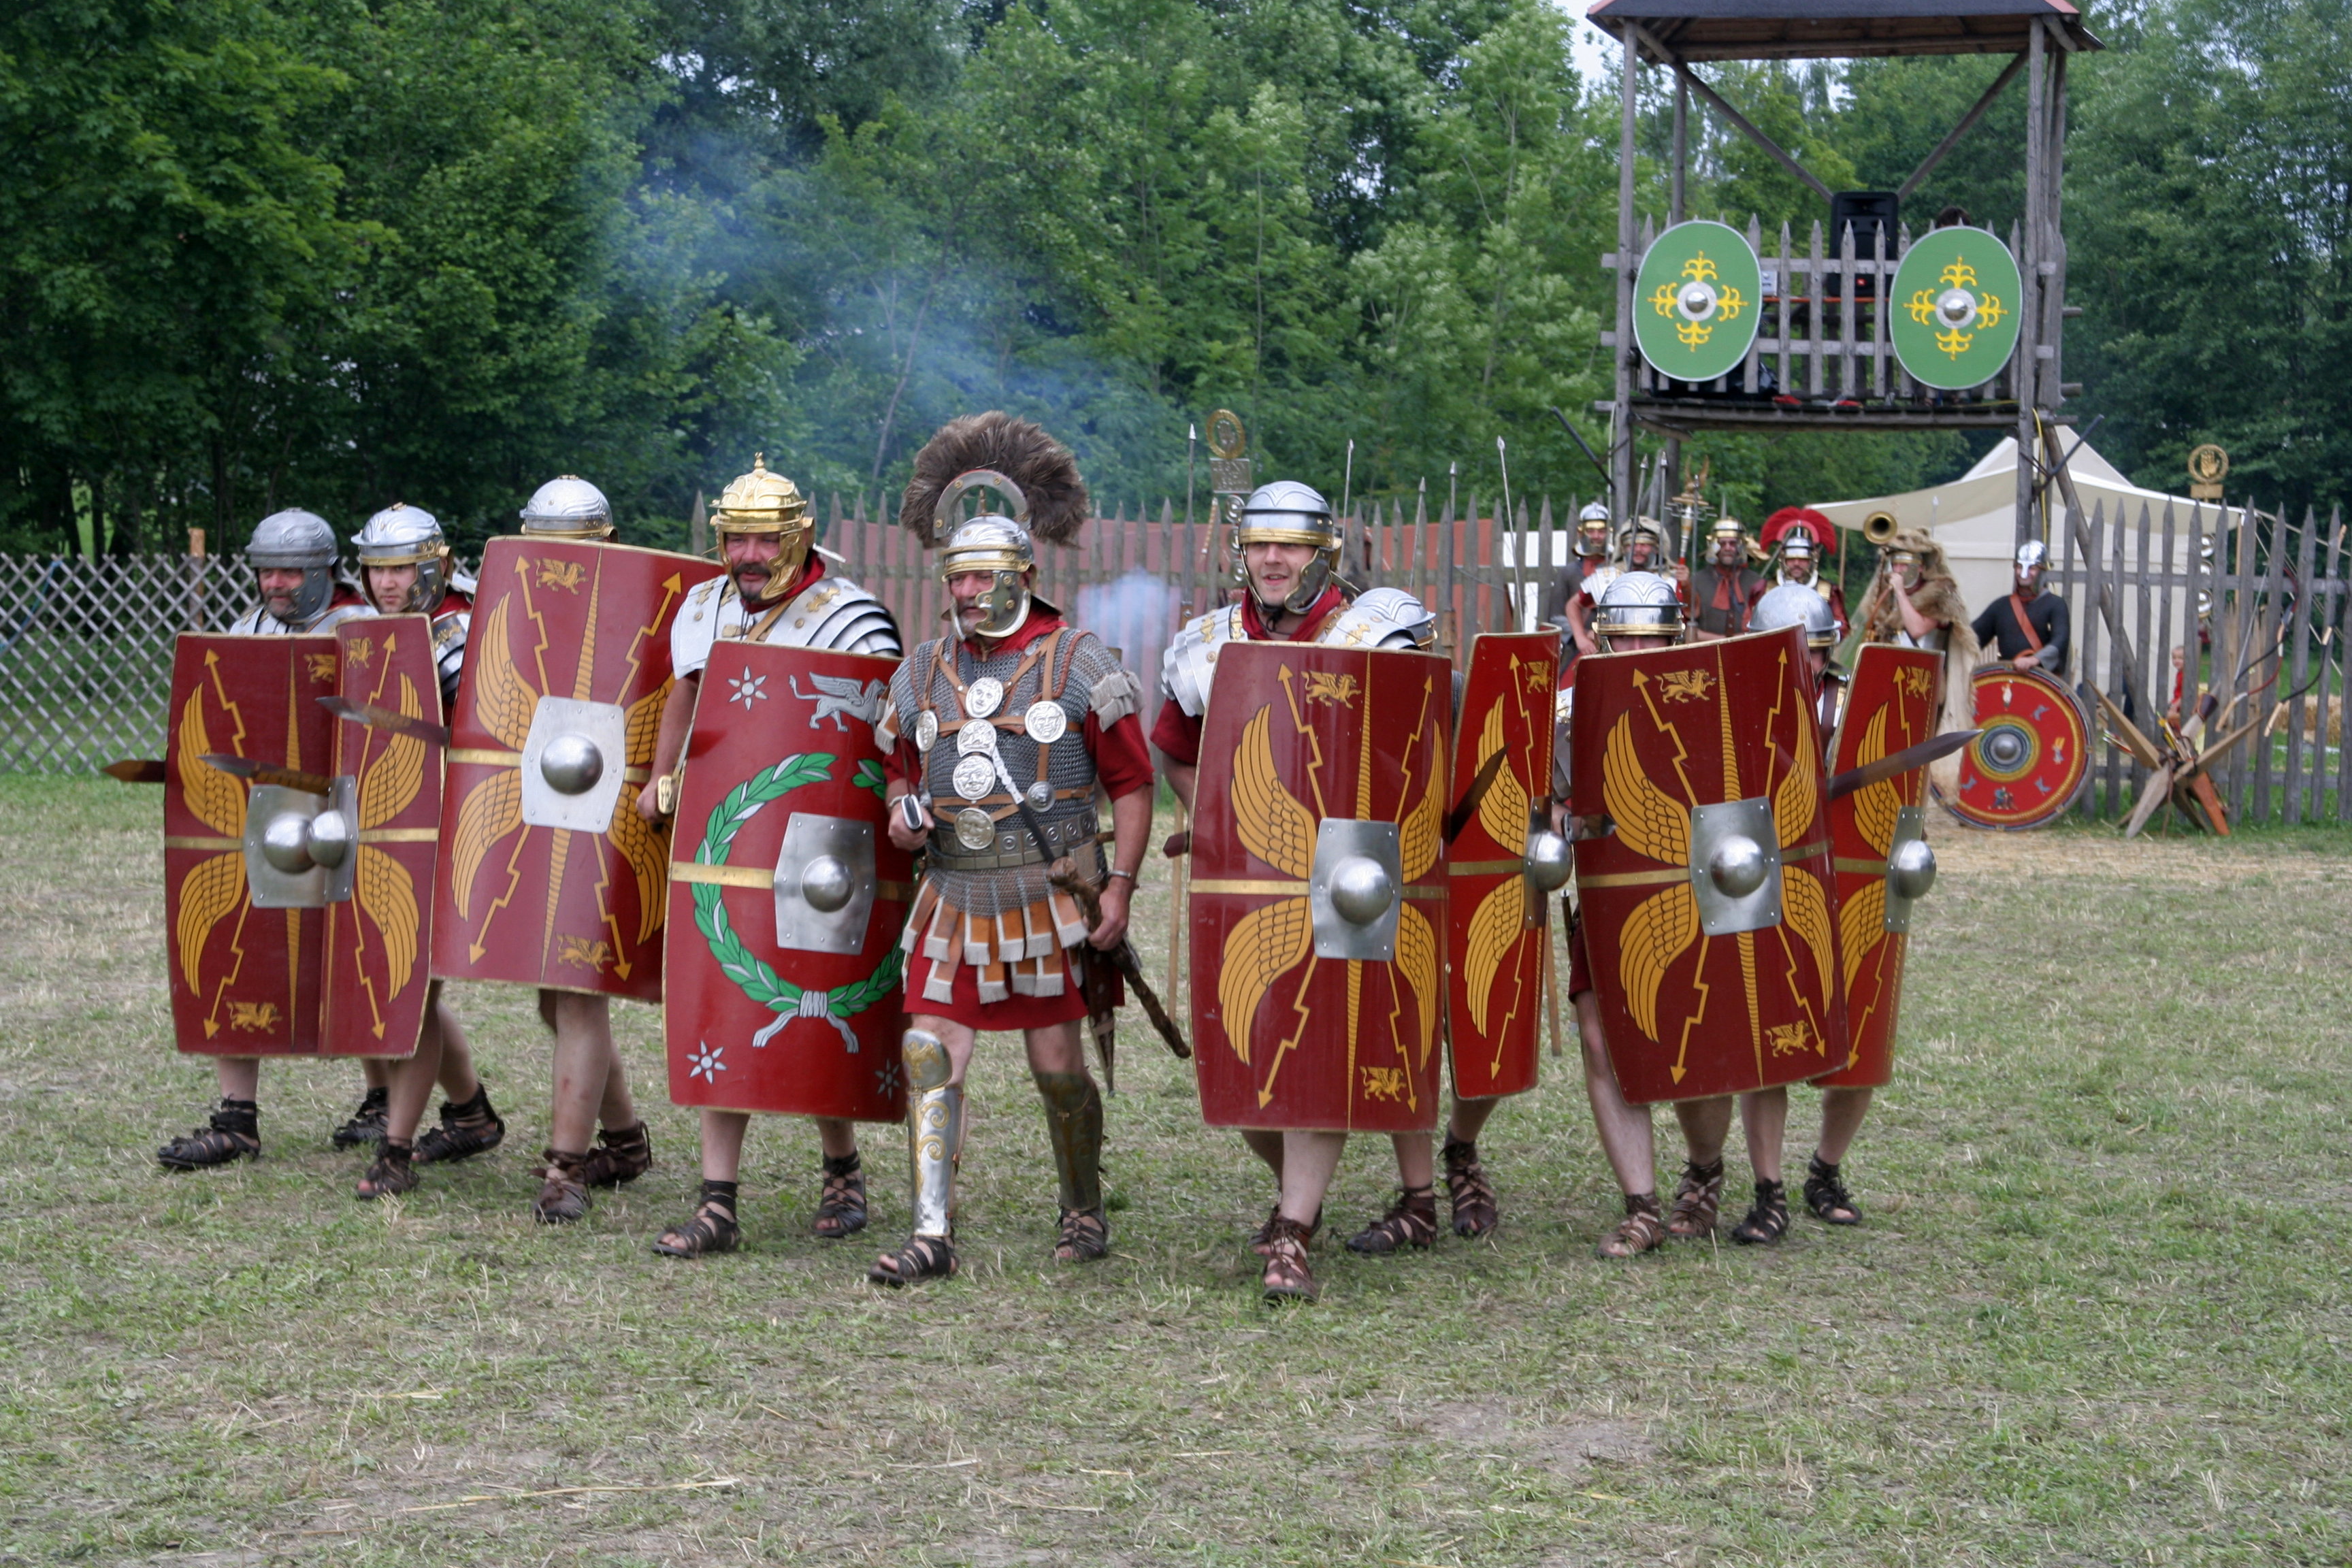 Roman Legions